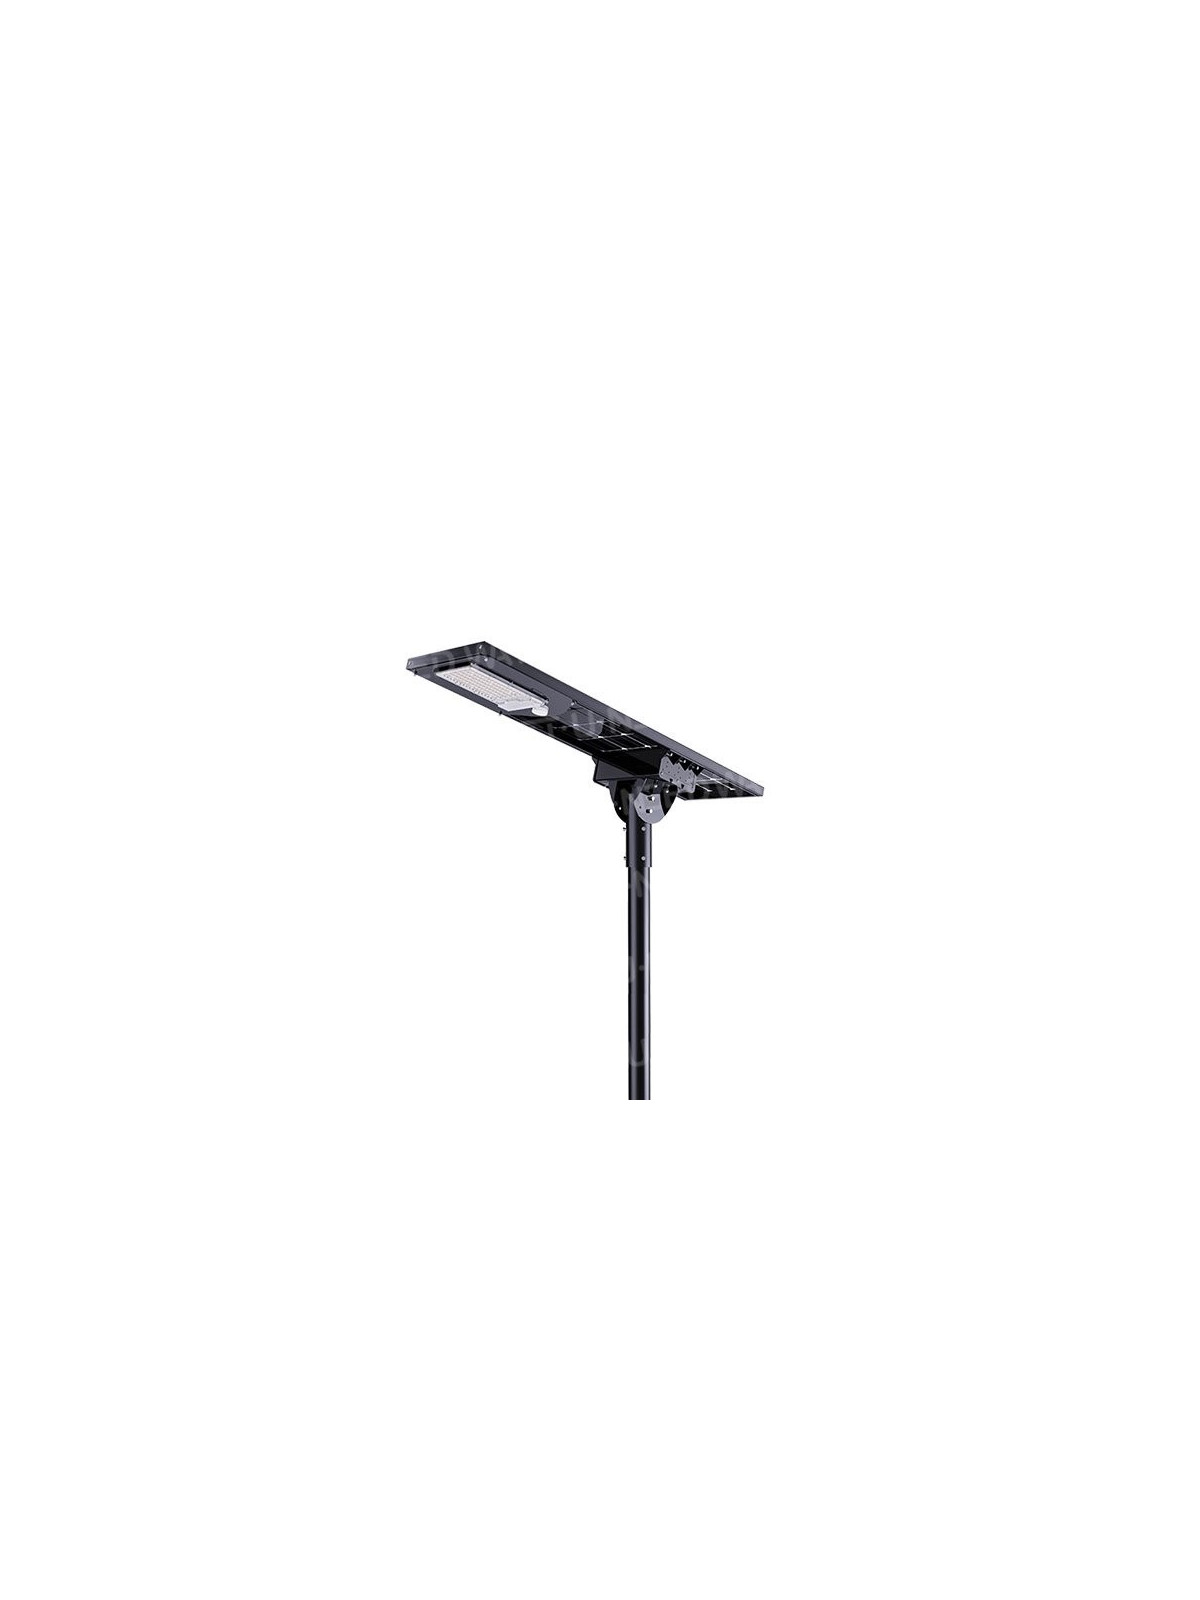 Lámpara de pie solar - ShootingStarIII LED independiente